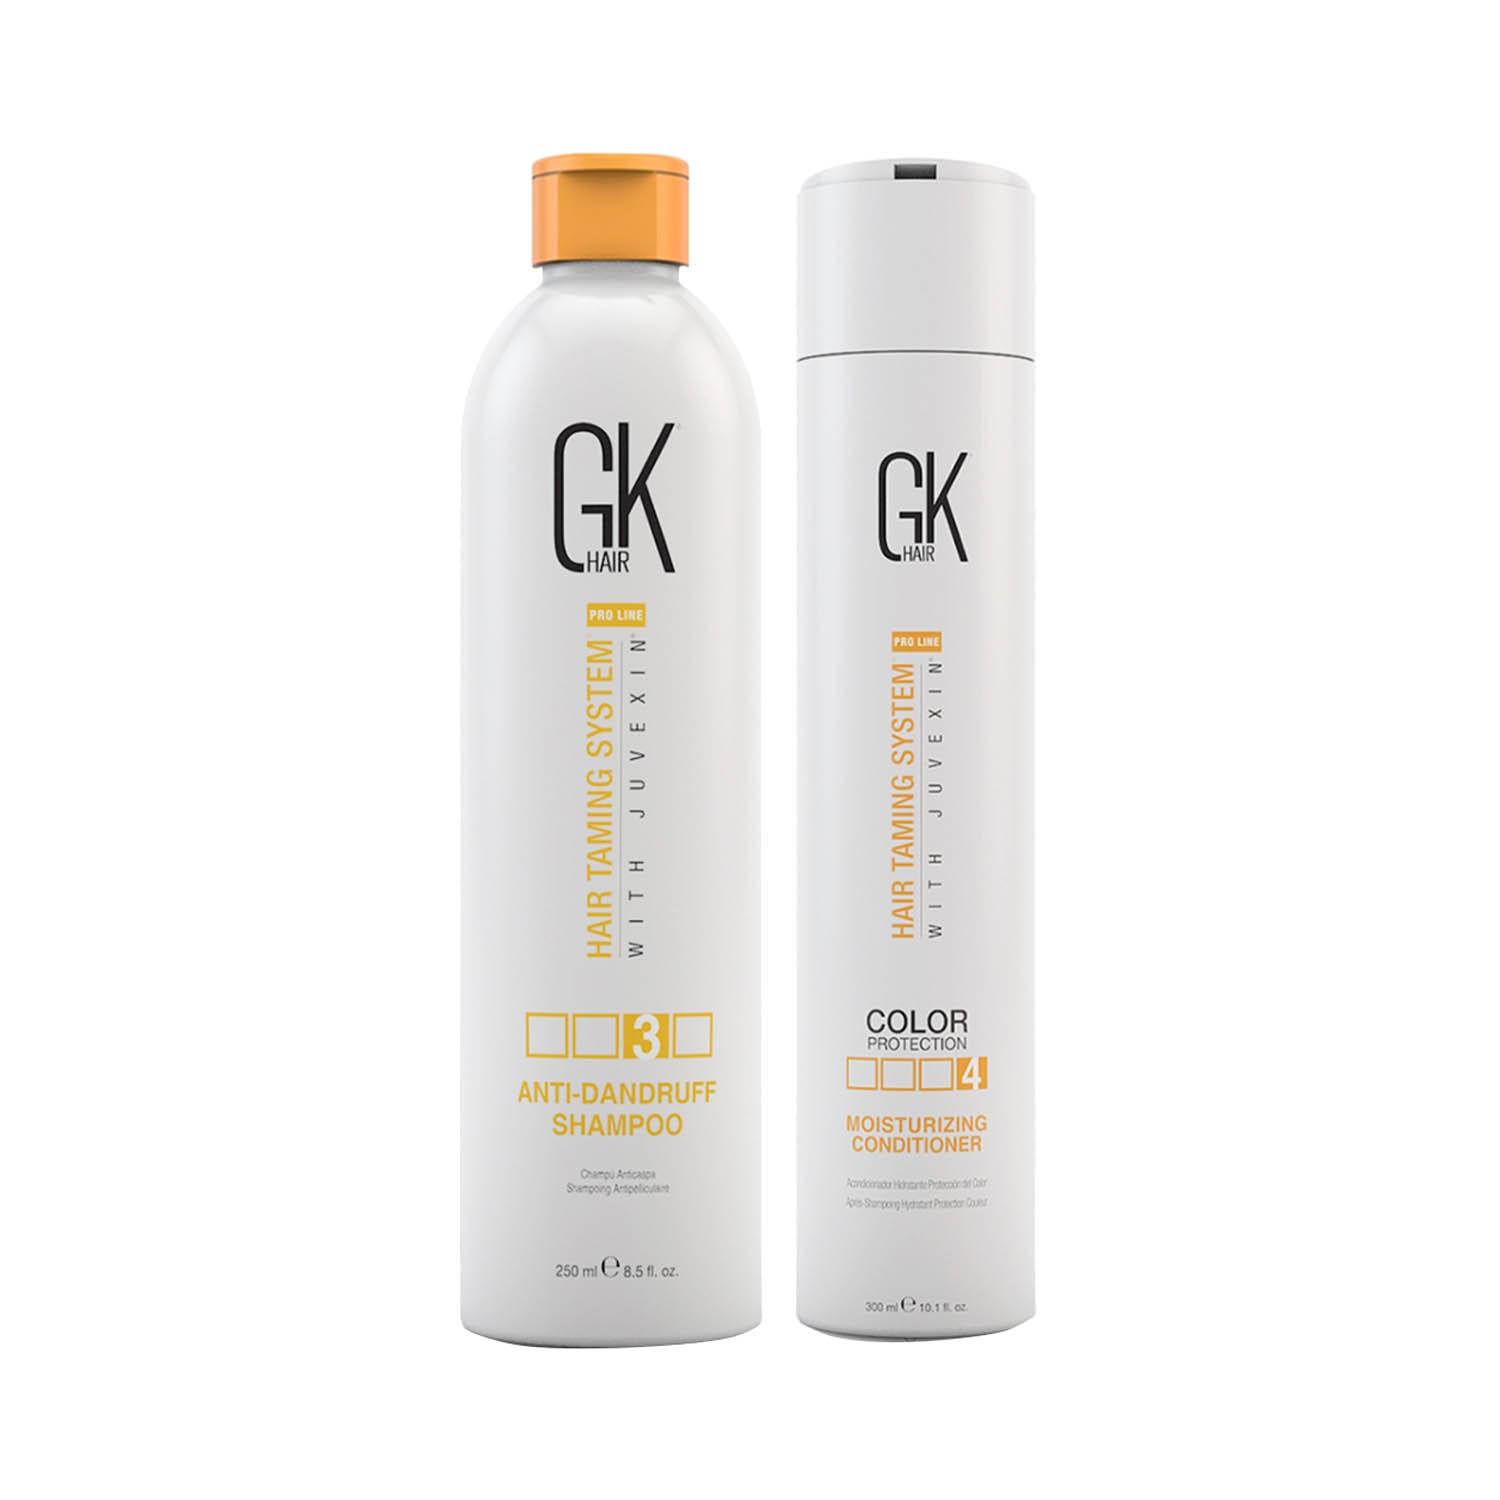 GK Hair | GK Hair Anti Dandruff Shampoo 250ml with Moisturizing Conditioner 300ml